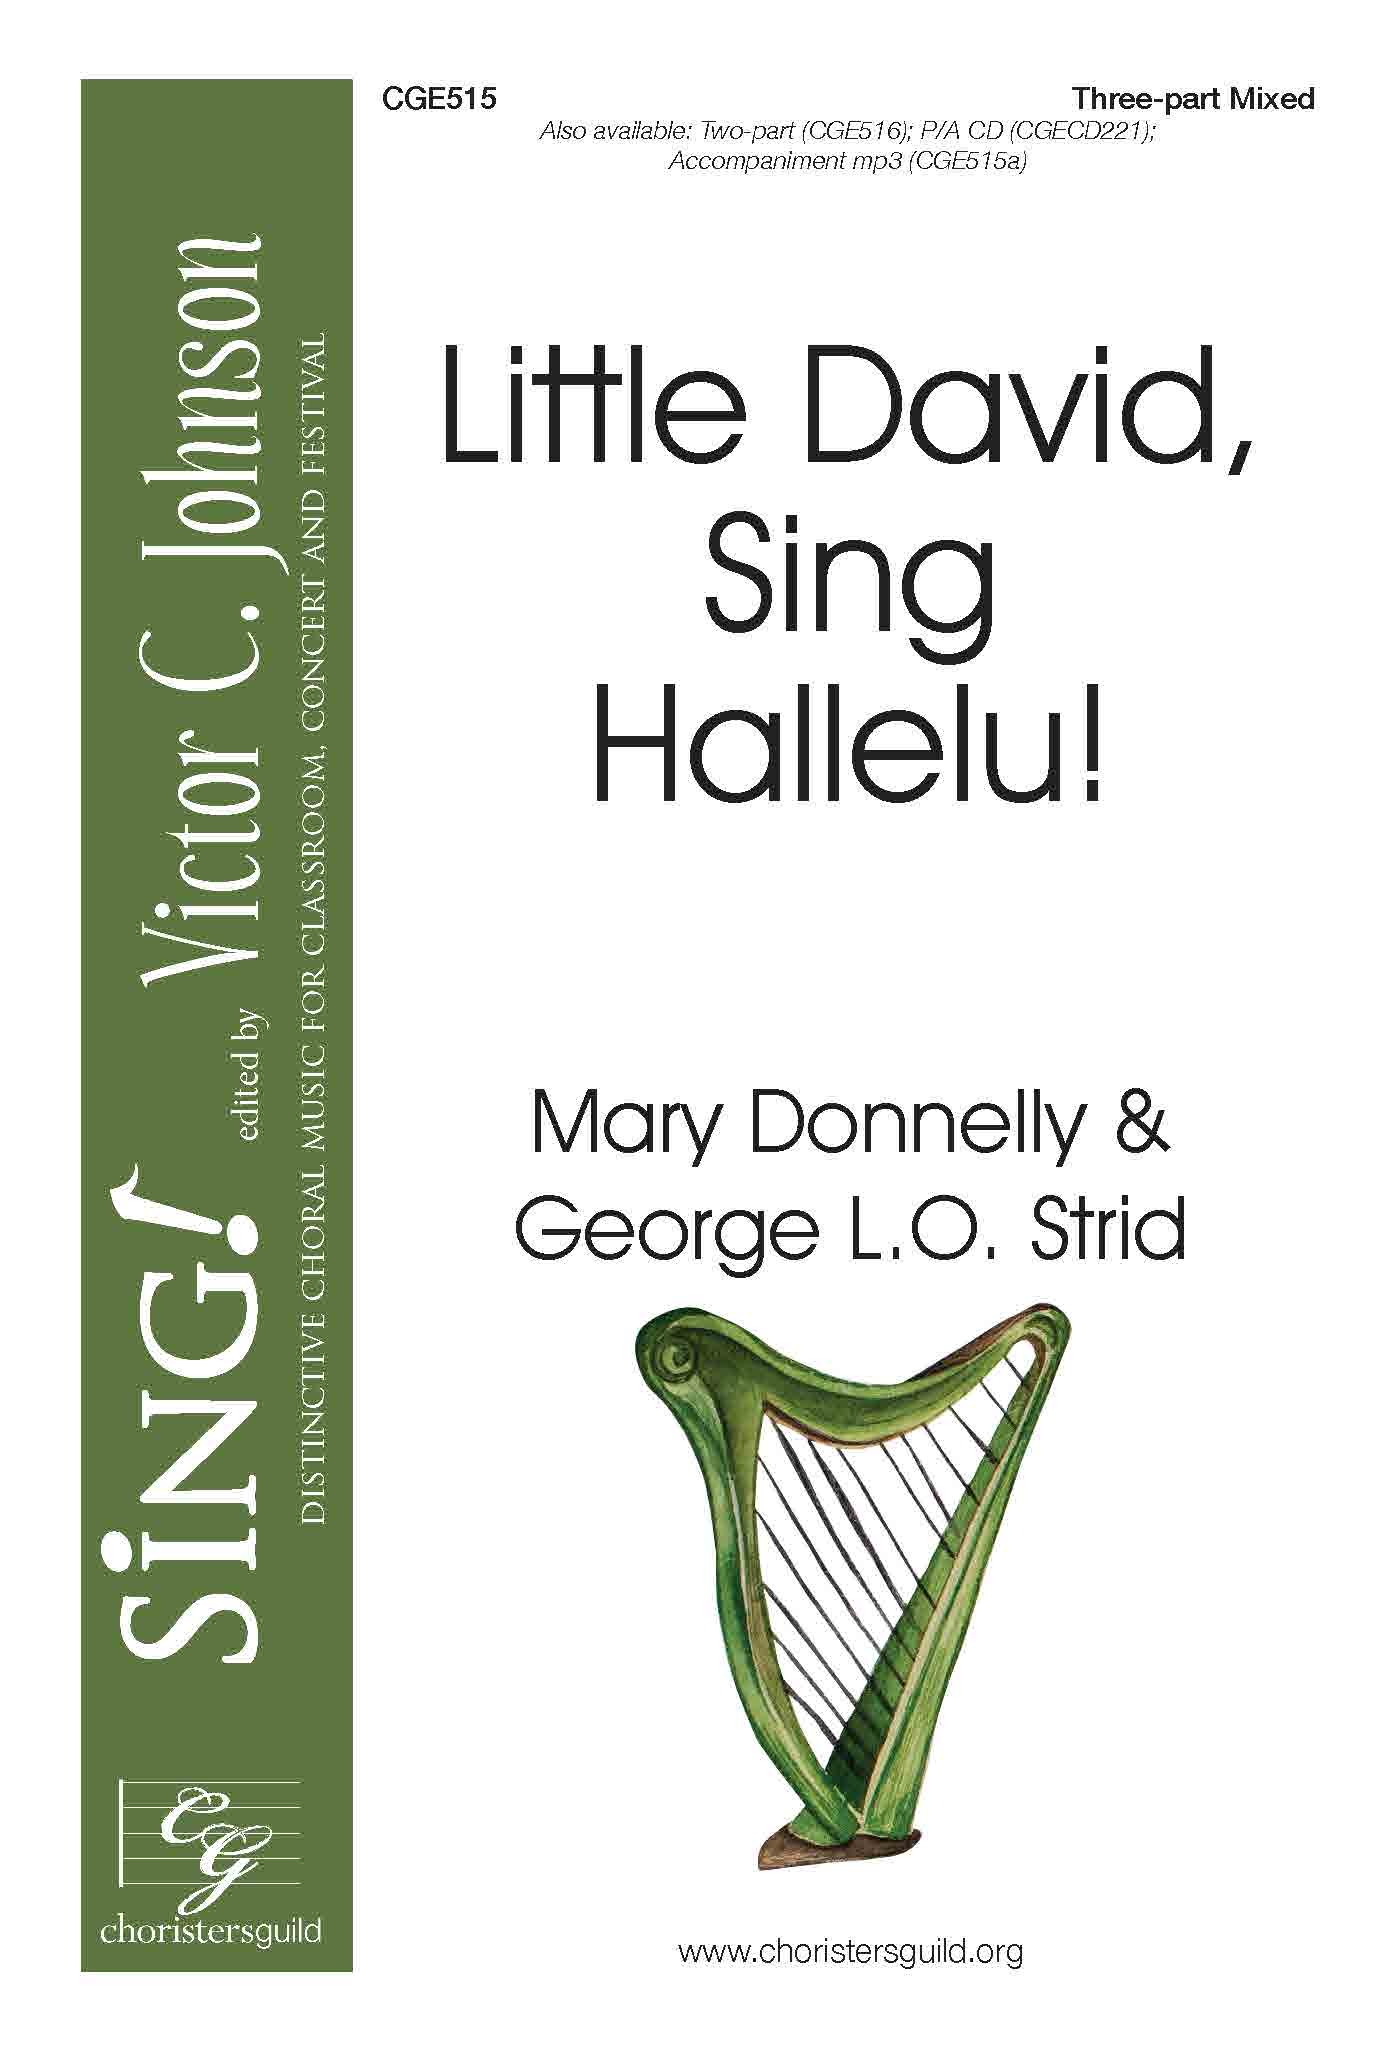 Little David, Sing Hallelu! - Three-part Mixed